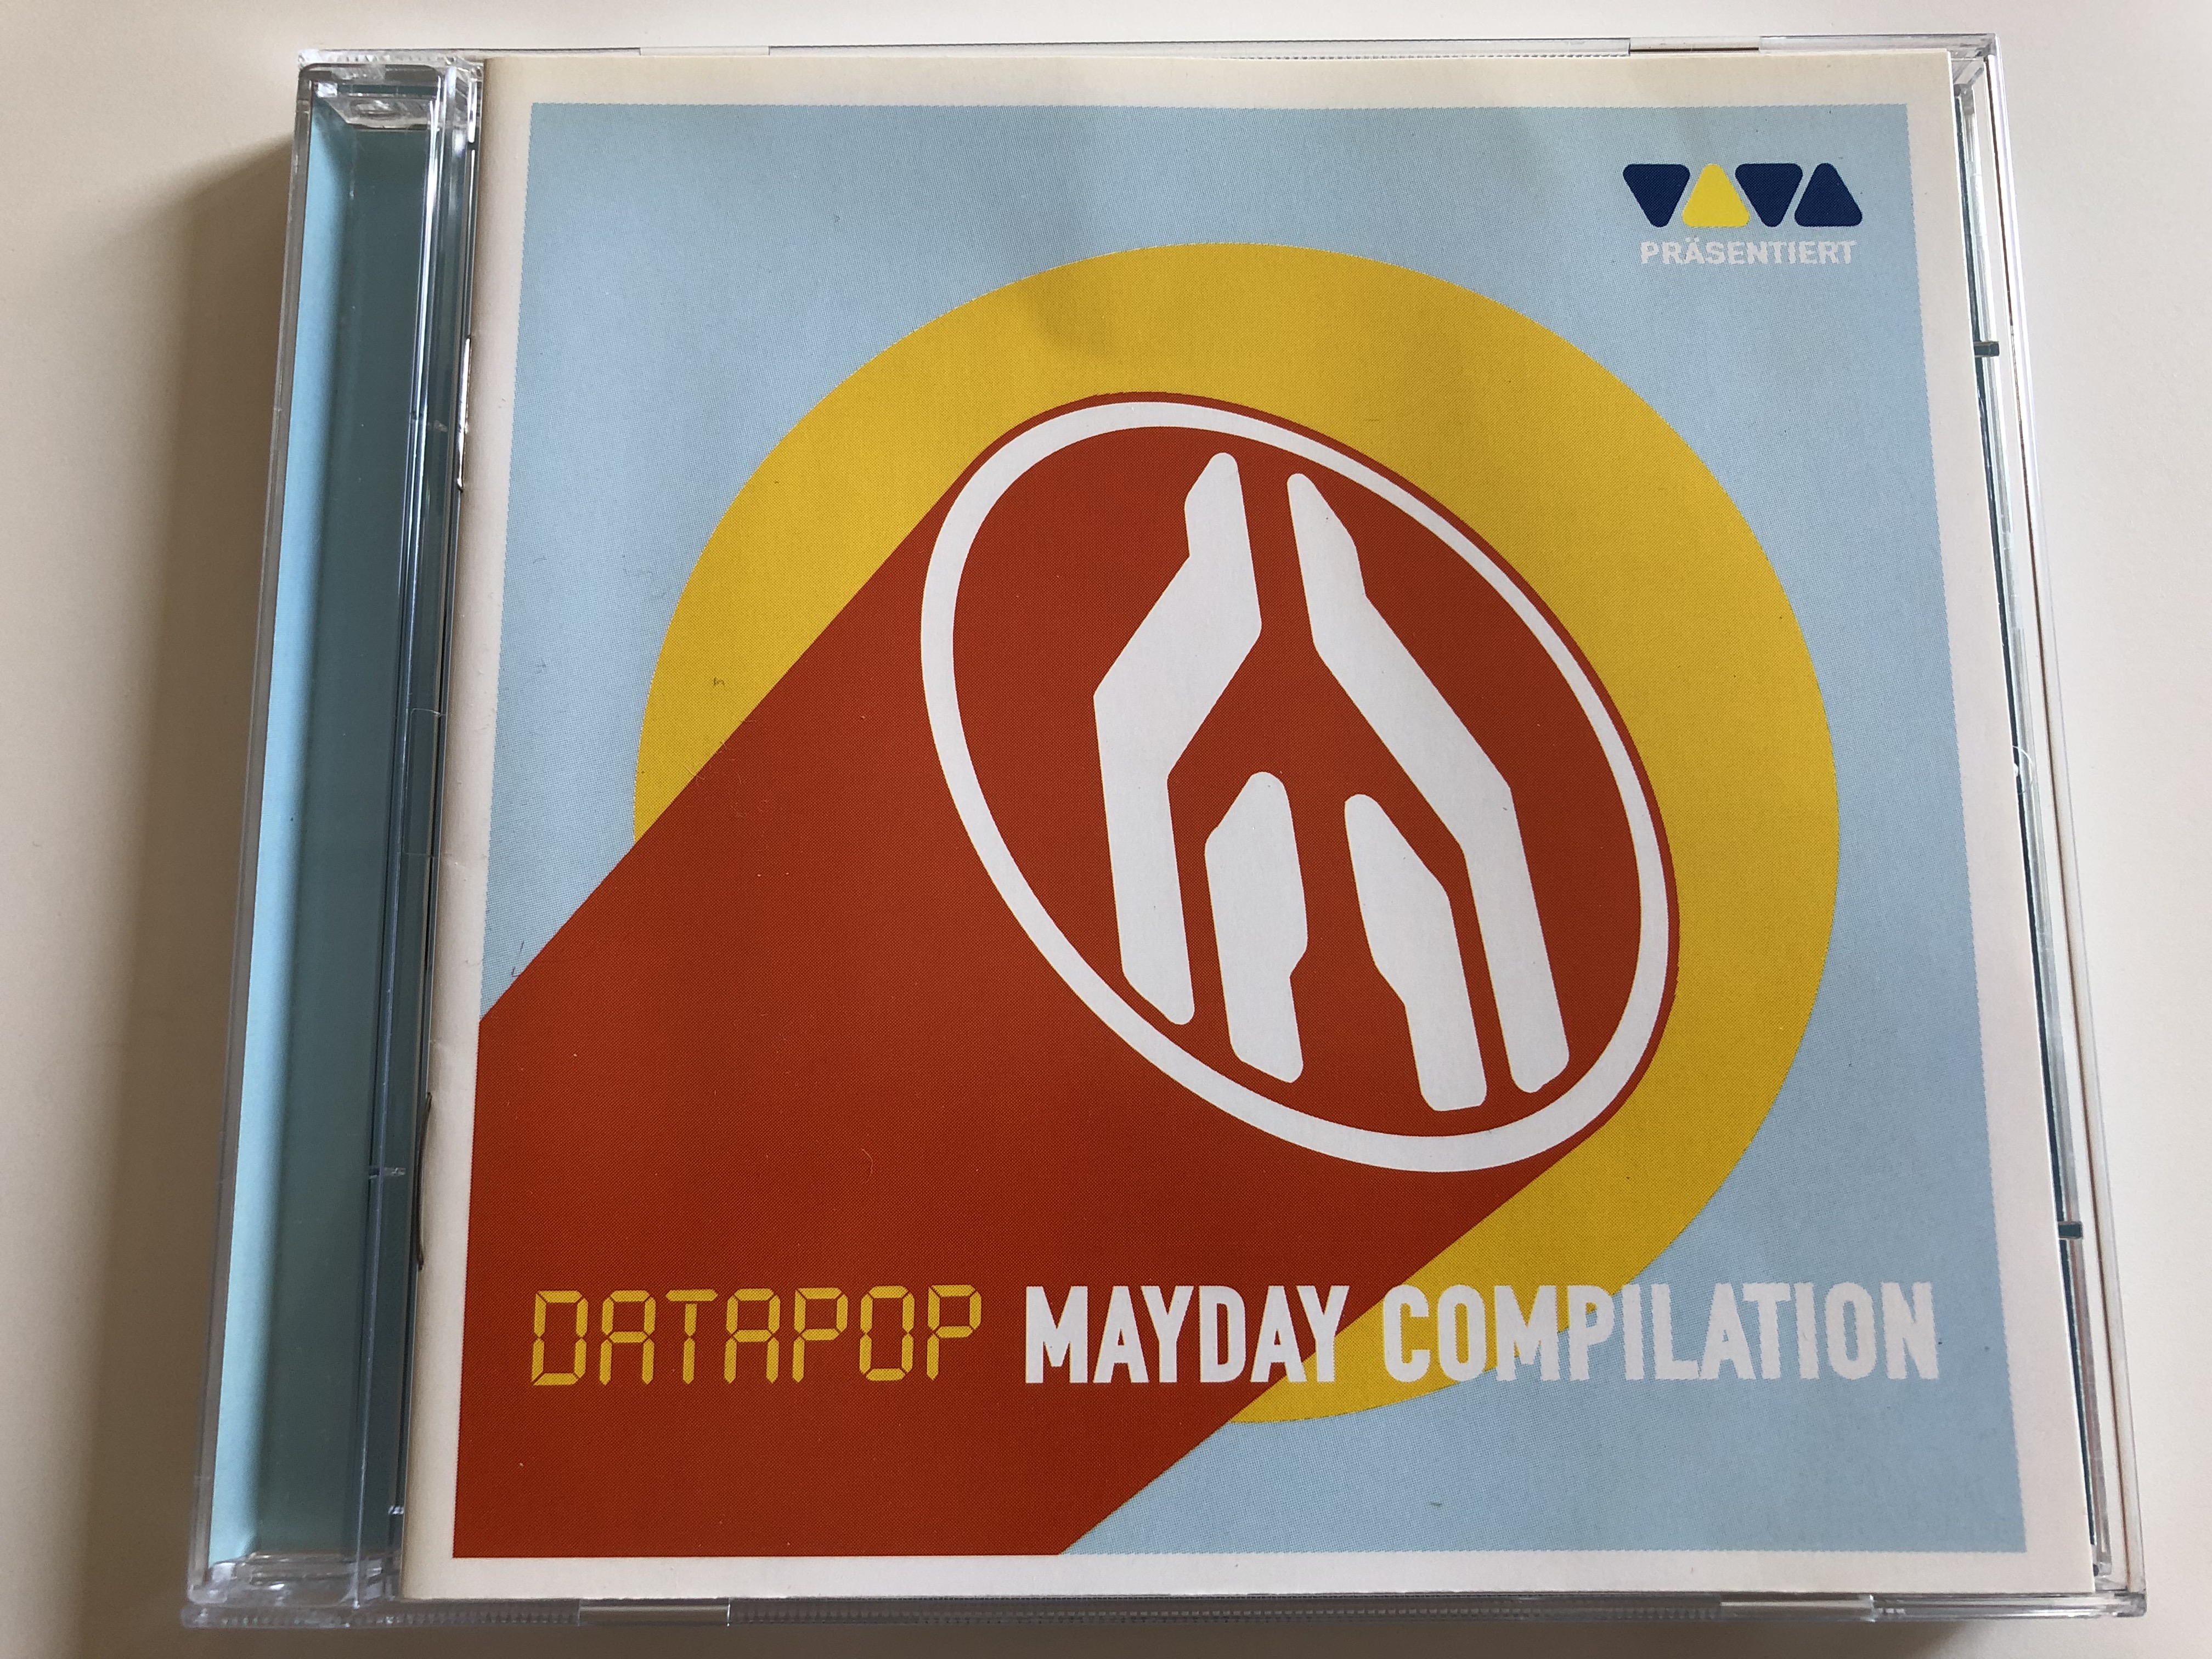 datapop-mayday-compilation-low-spirit-recordings-audio-cd-2000-743217592325-1-.jpg